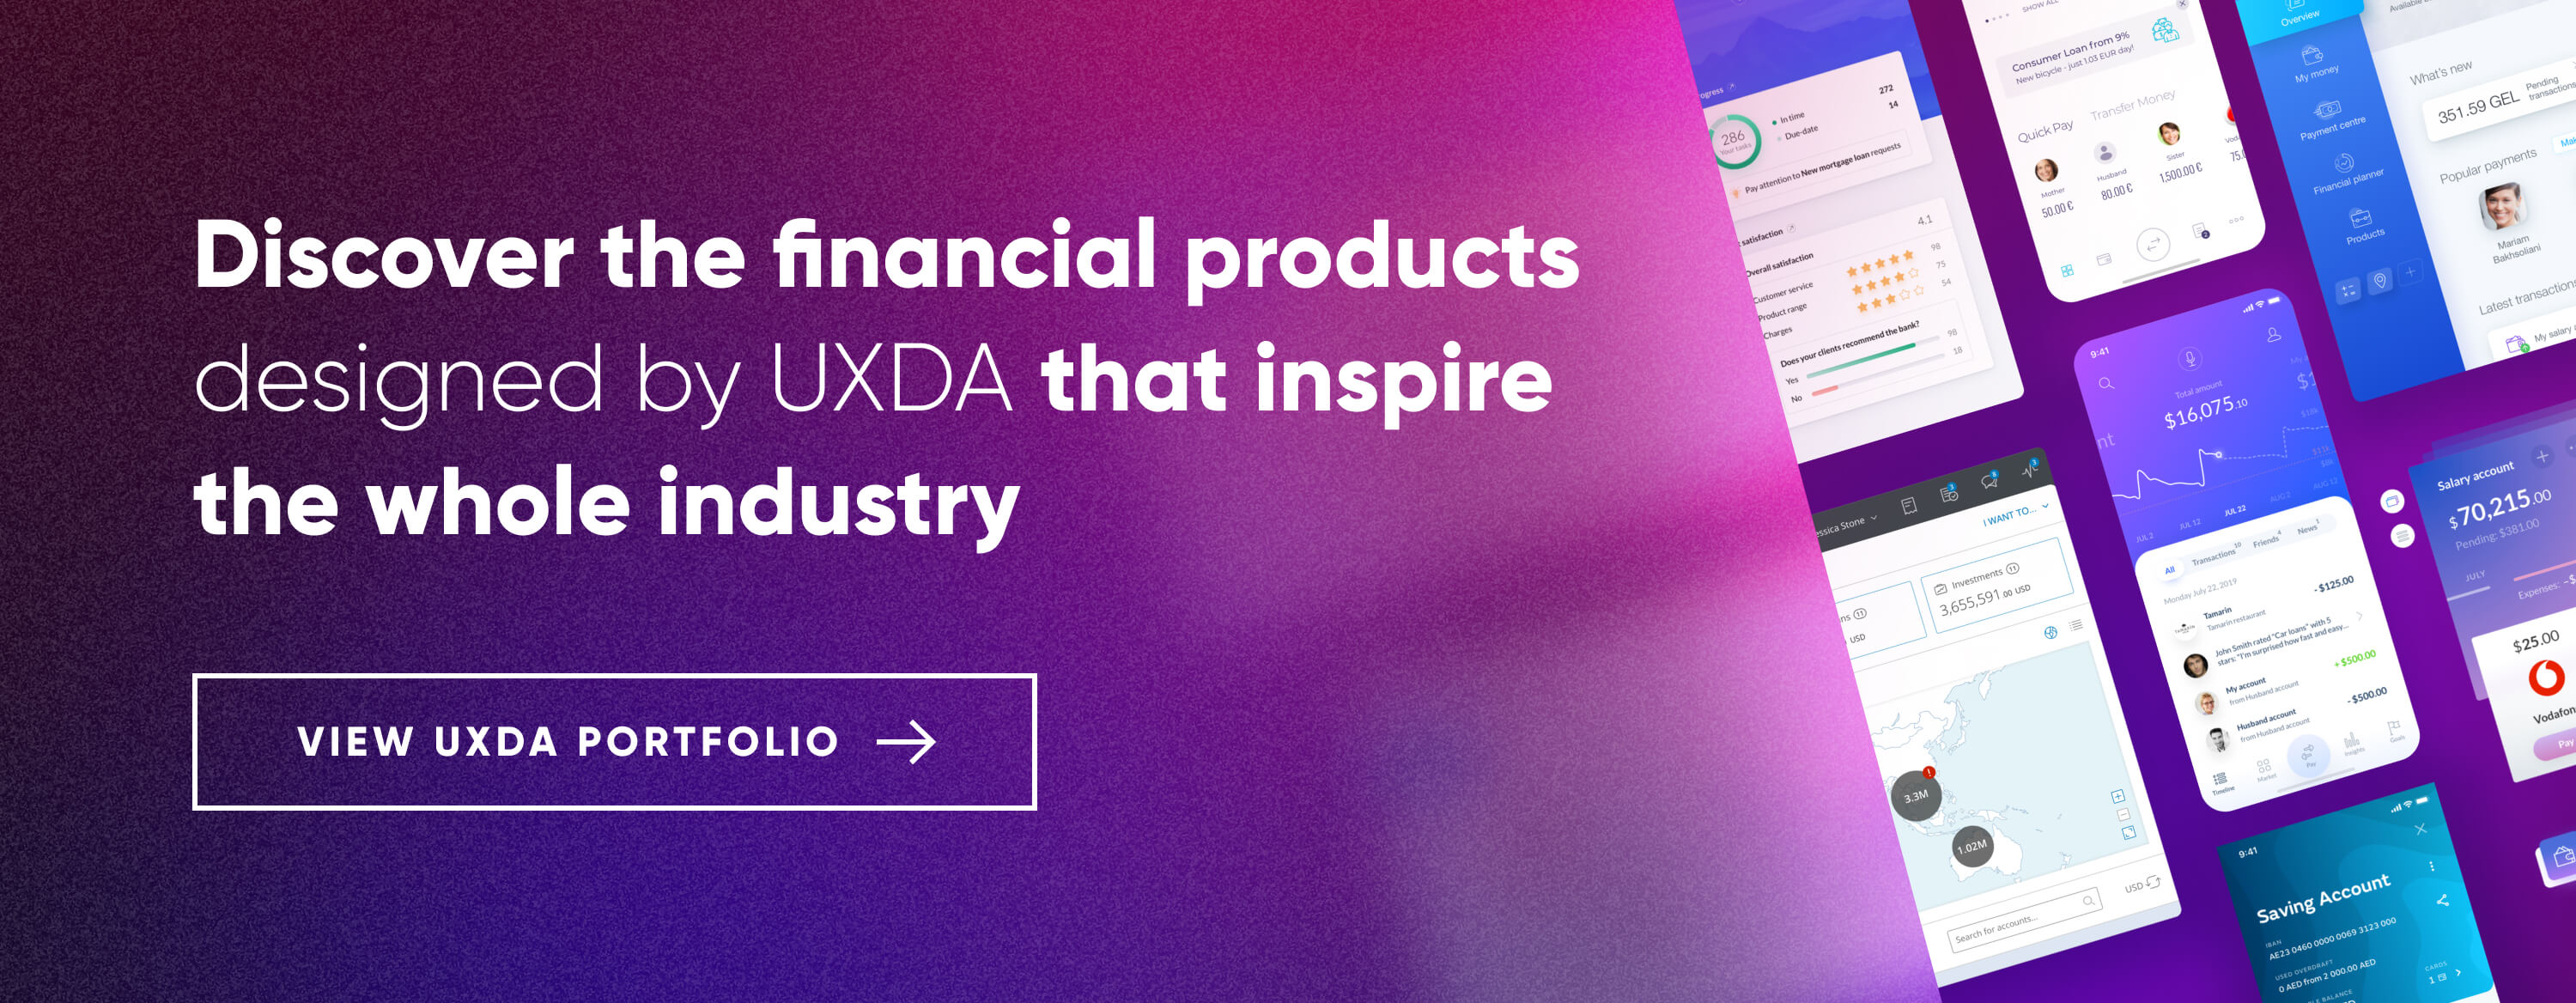 uxda-portfolio-financial-digital-product-inspire-industry-ux-1669633193.jpg